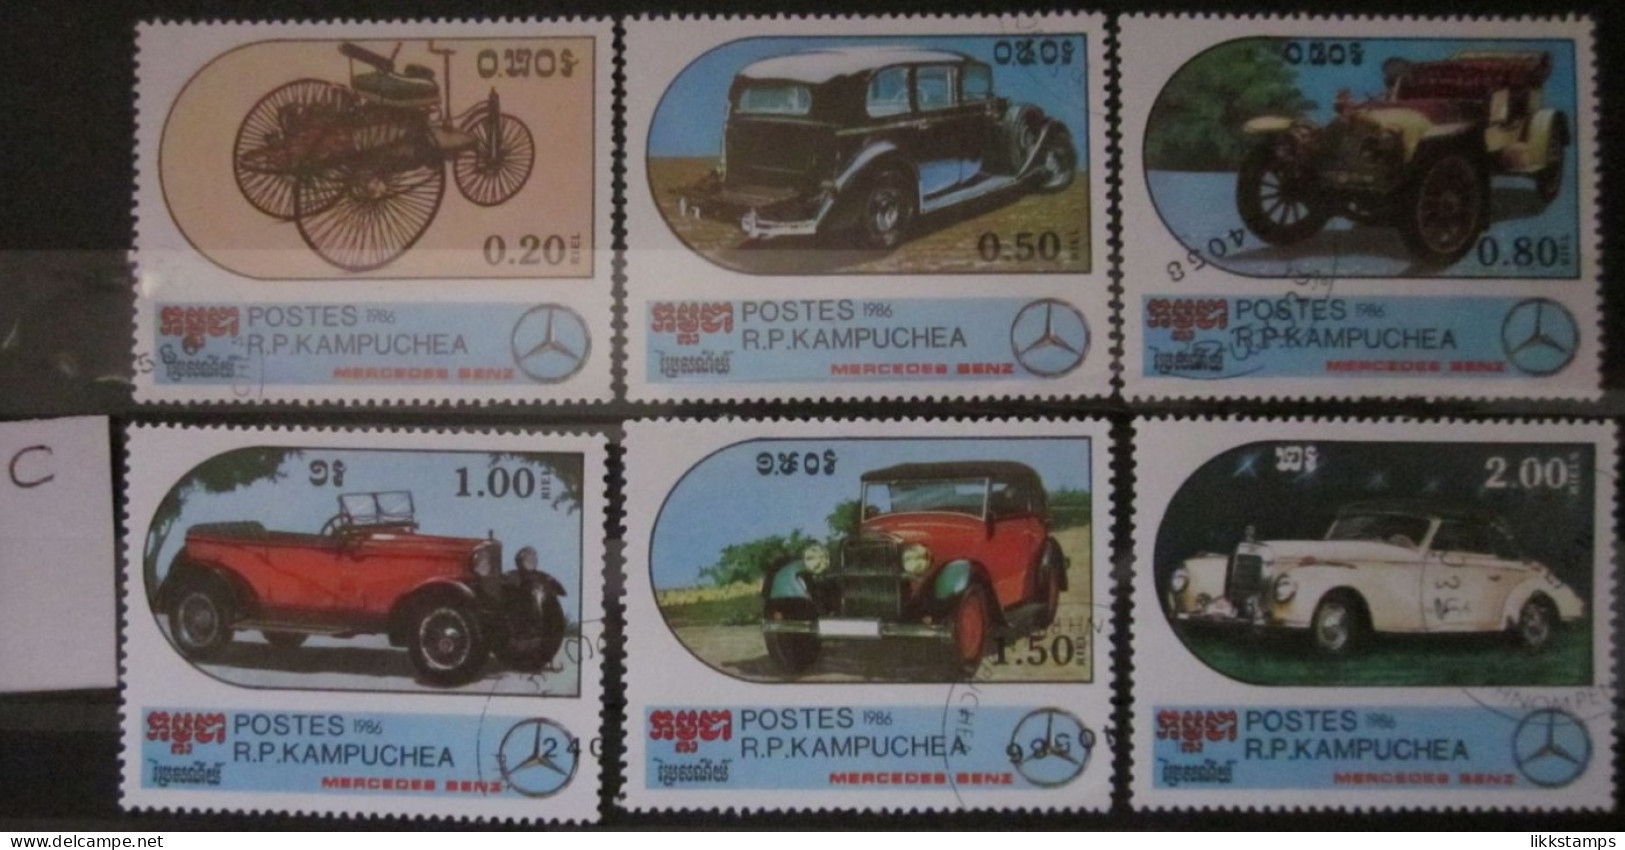 KAMPUCHEA 1986 ~ S.G. 720 - 725, ~ 'LOT C' ~ MOTOR CARS. ~ VFU #03342 - Kampuchea